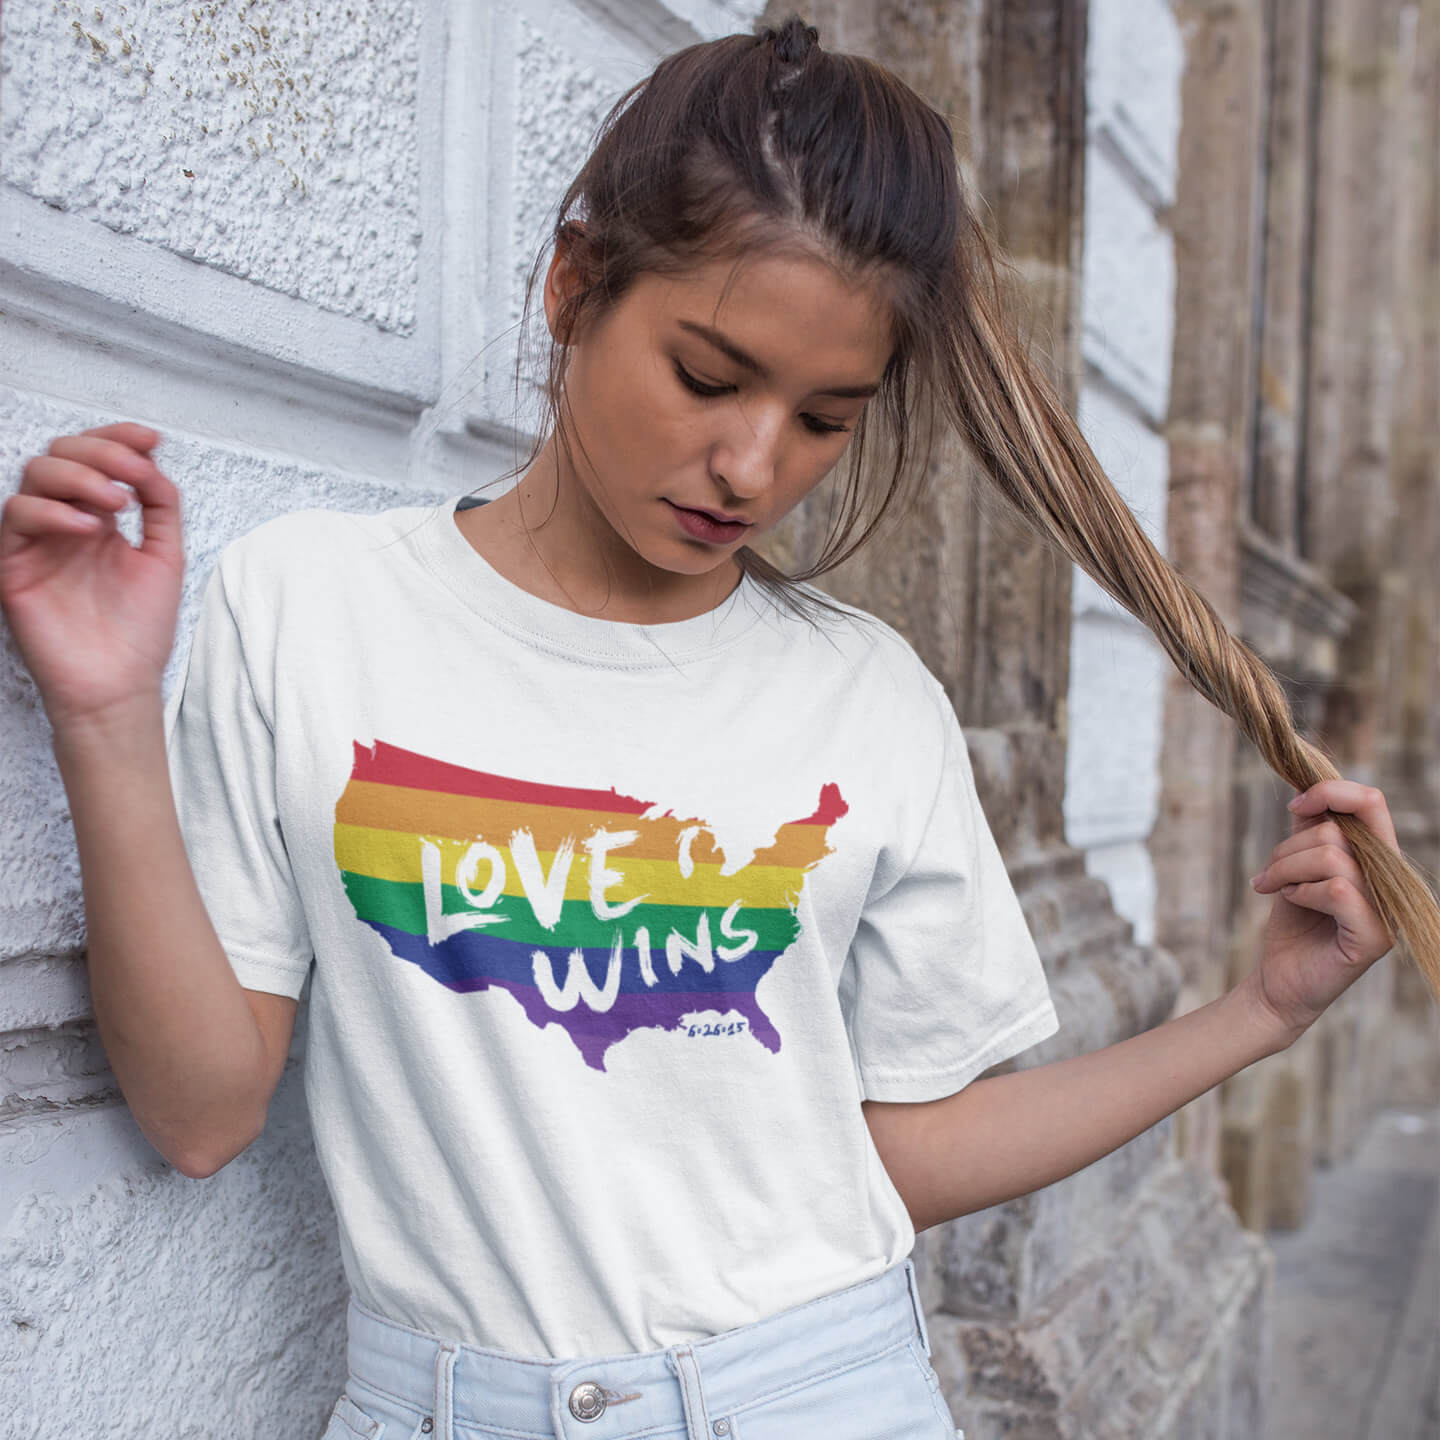 Rainbow love wins t-shirt on white